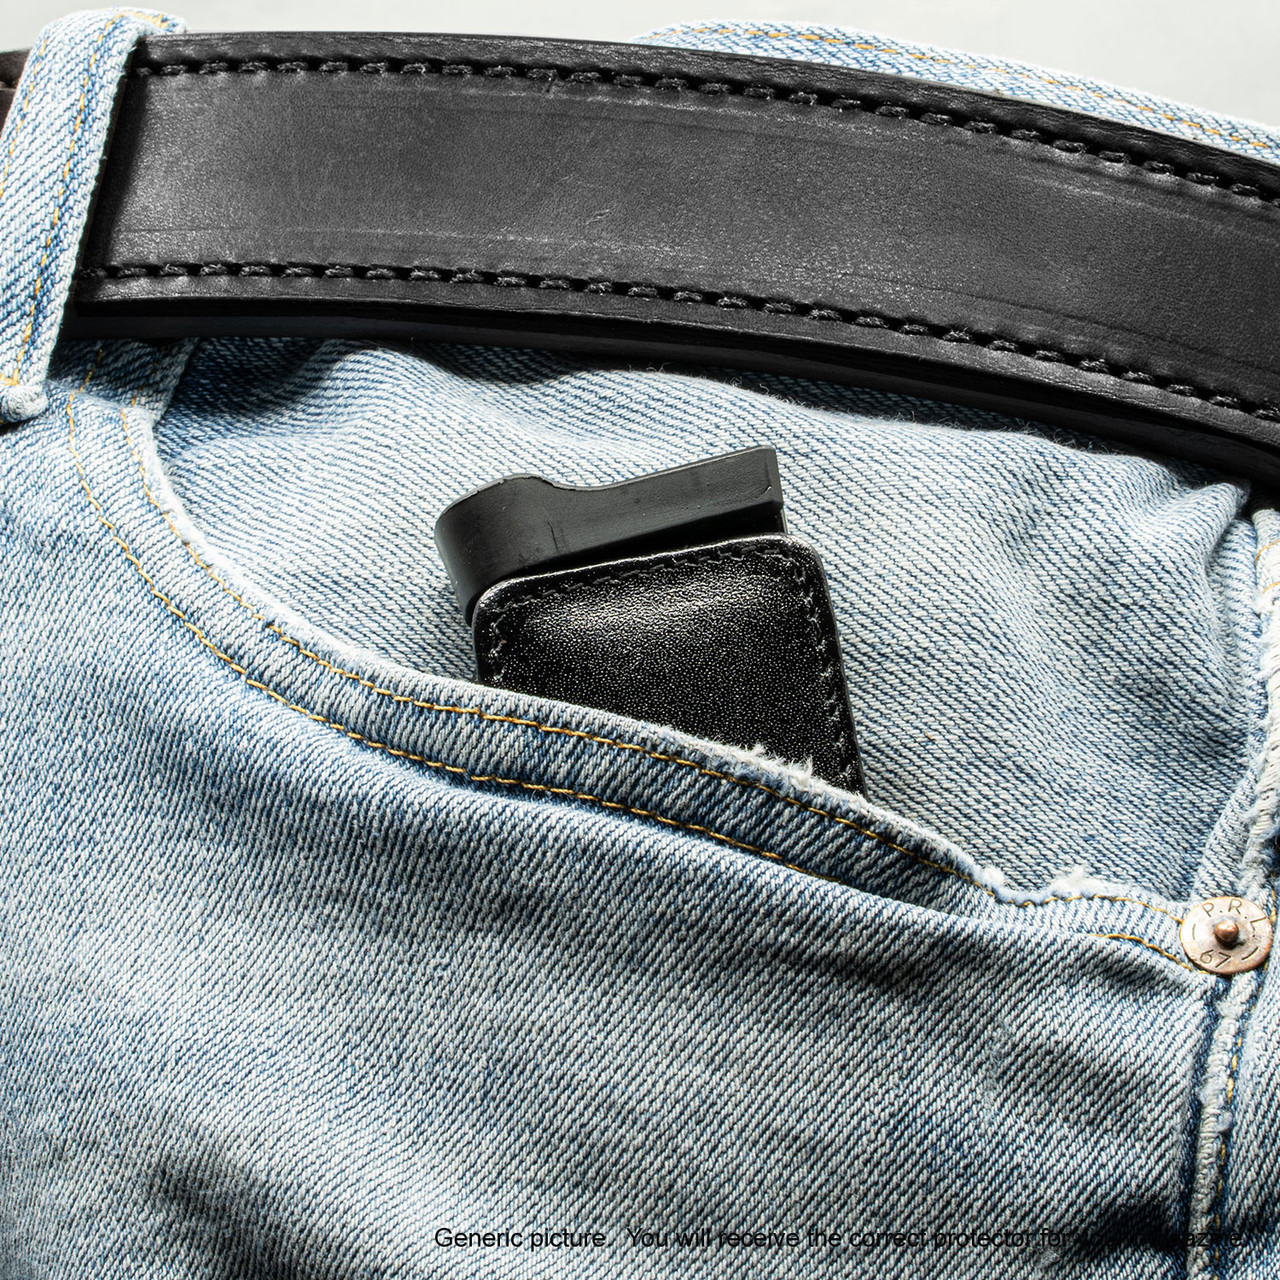 Glock 32 Black Leather Magazine Pocket Protector